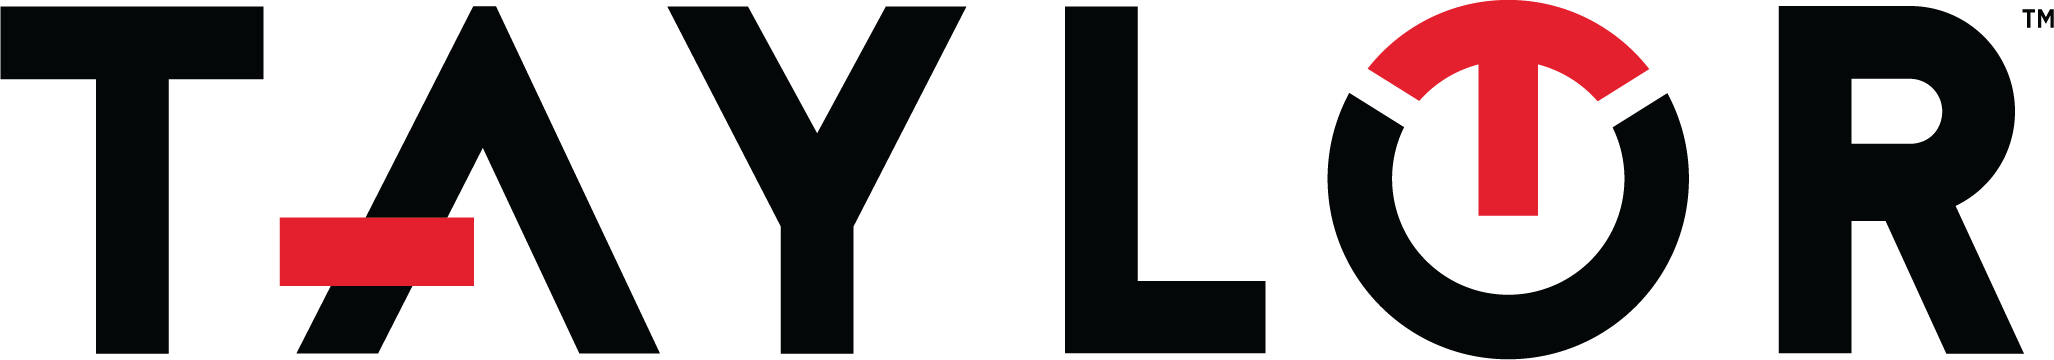 Taylor Logo-1